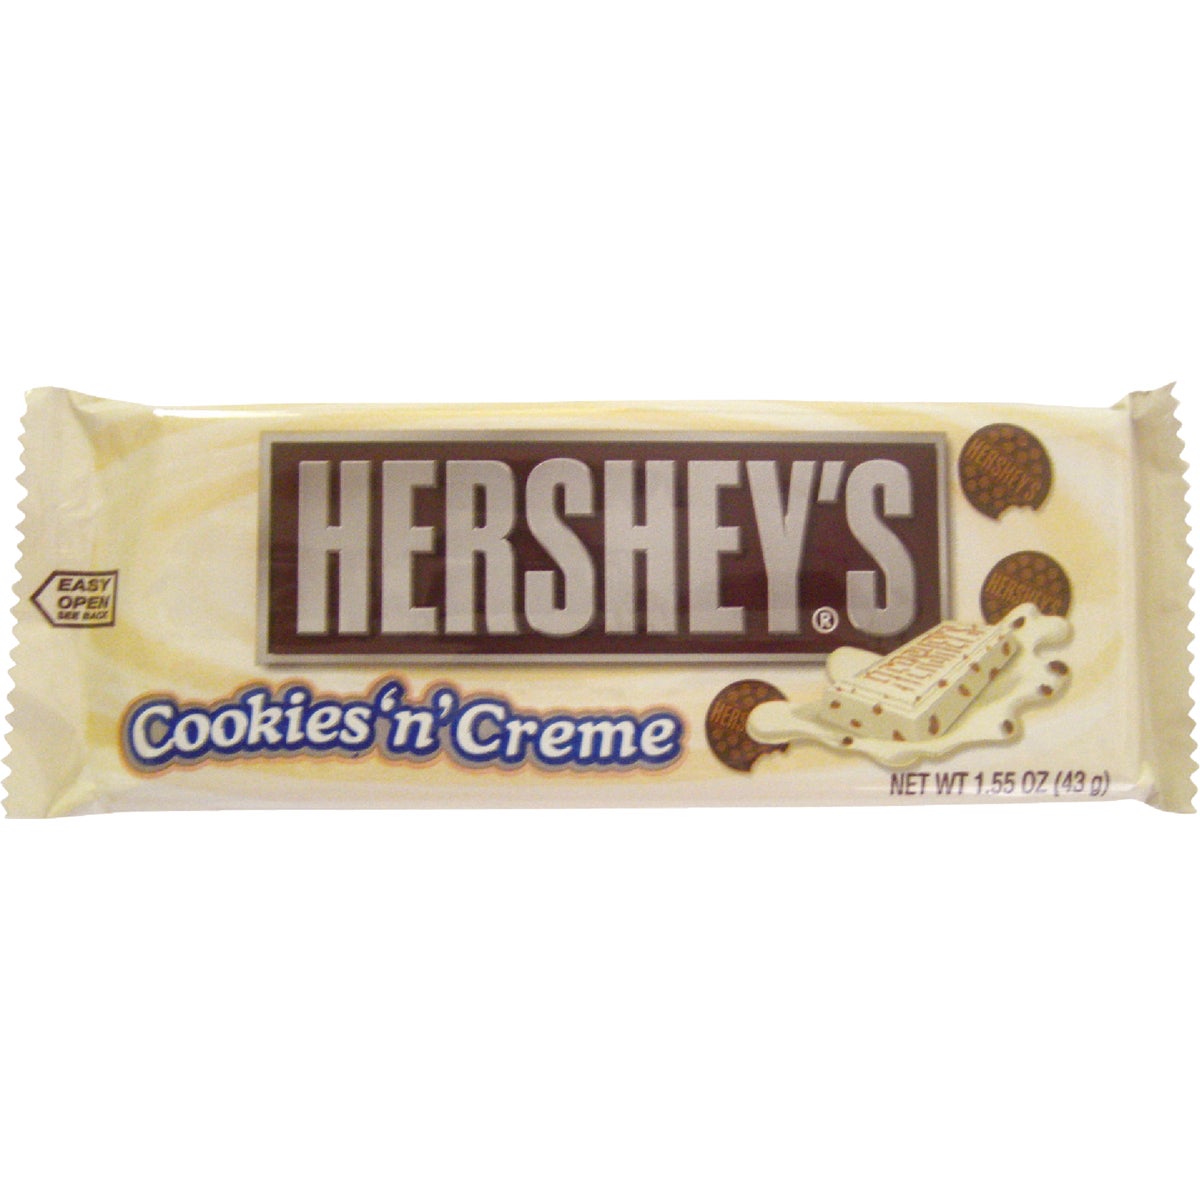 Item 973101, Hershey's white chocolate cookies and cream candy bar.